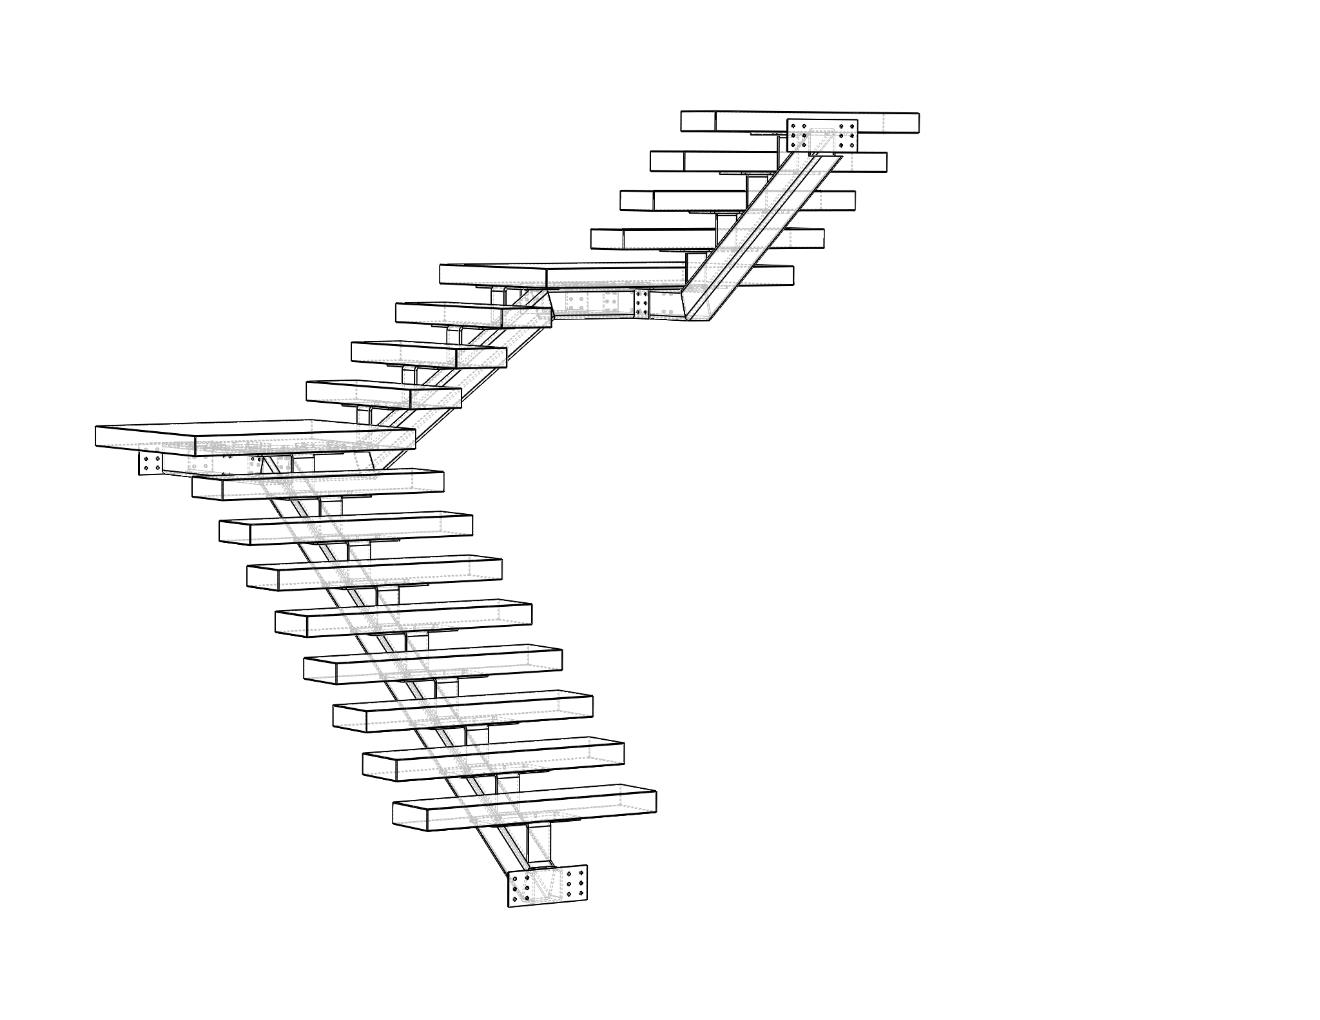 Mono-Stringer U-Stair modern staircase design